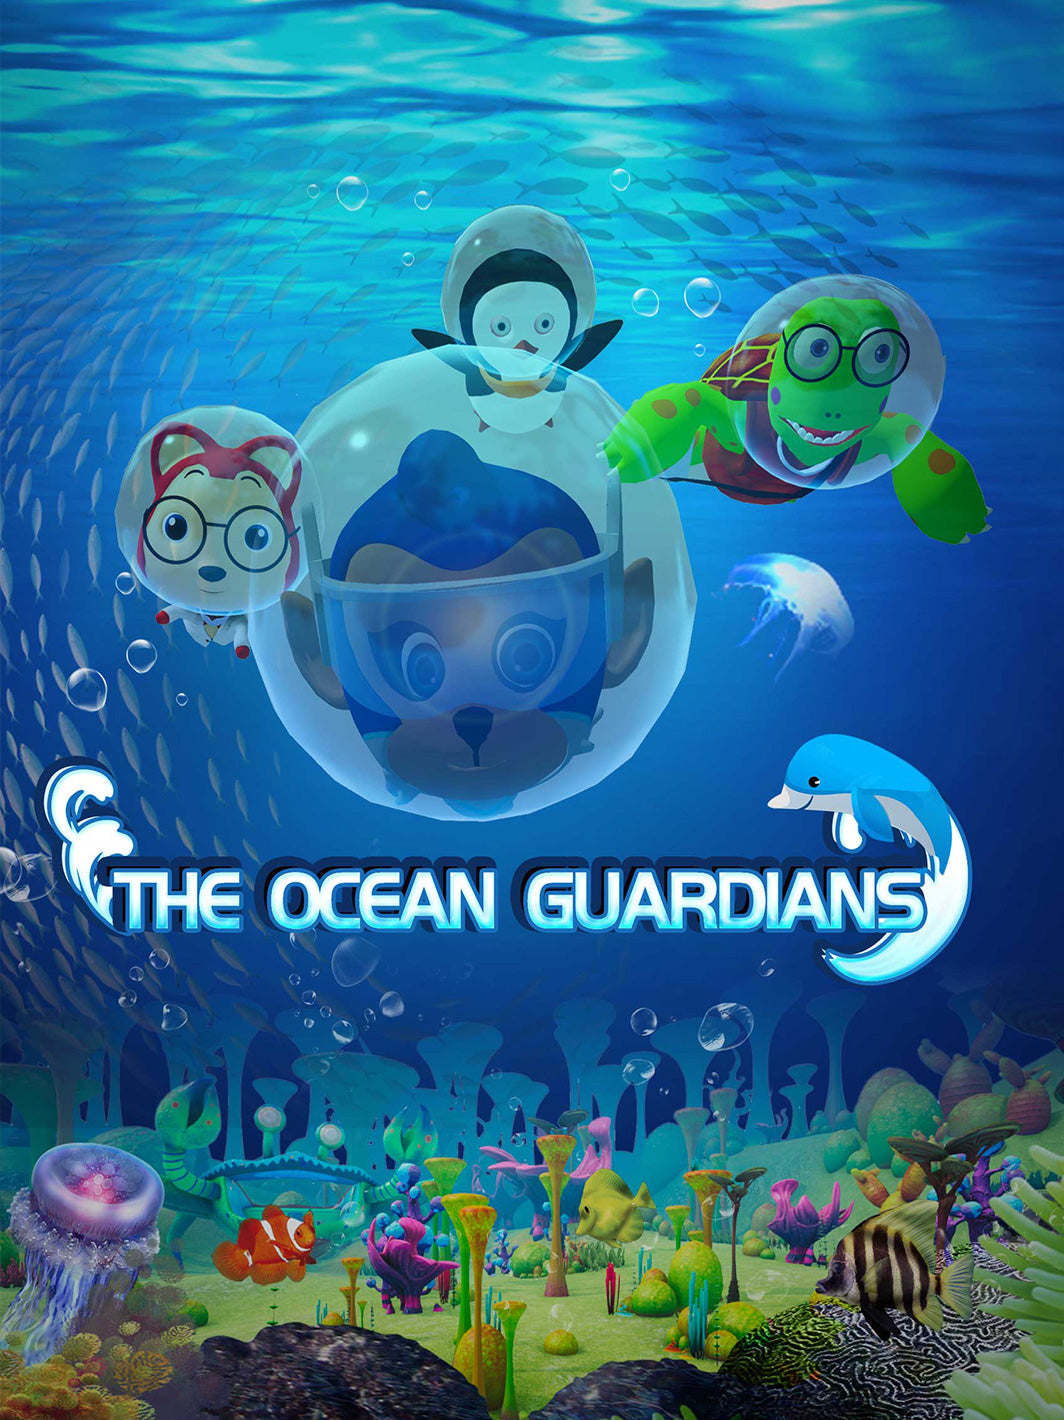 ShallxR VR games - the ocean guardians